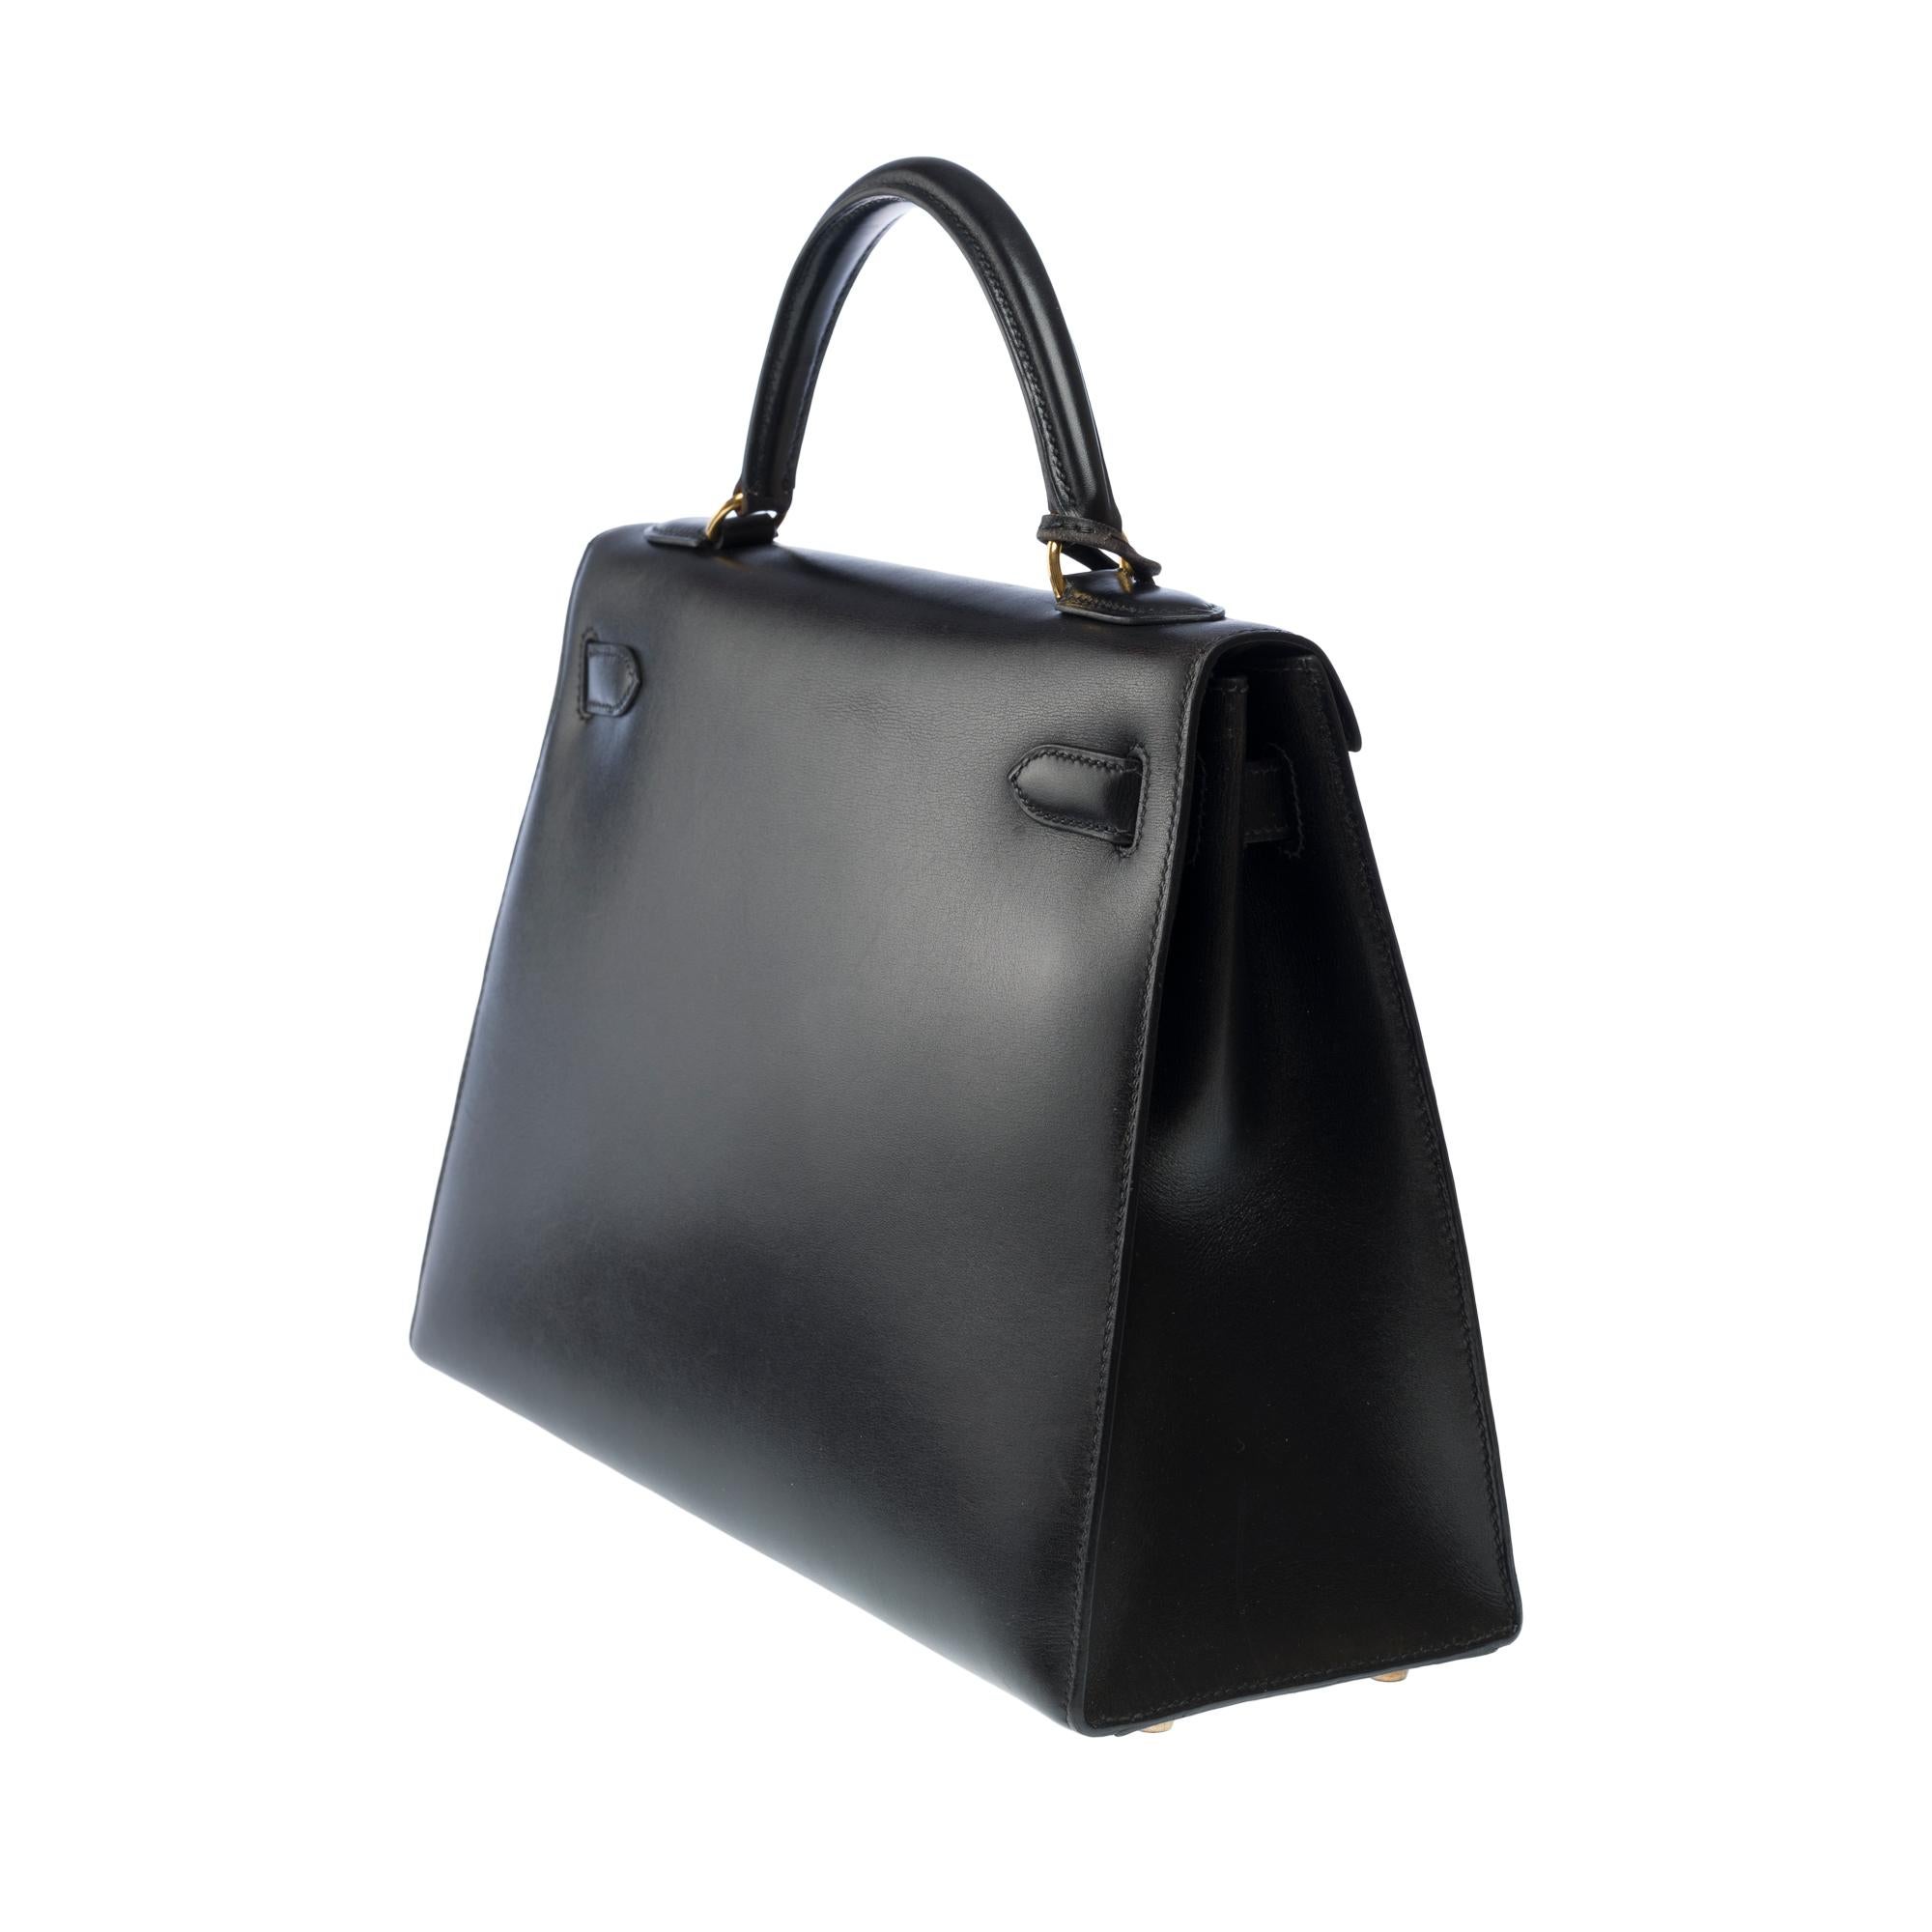 Vintage Hermès Kelly 32 sellier handbag strap in Black Box Calf leather, GHW 2